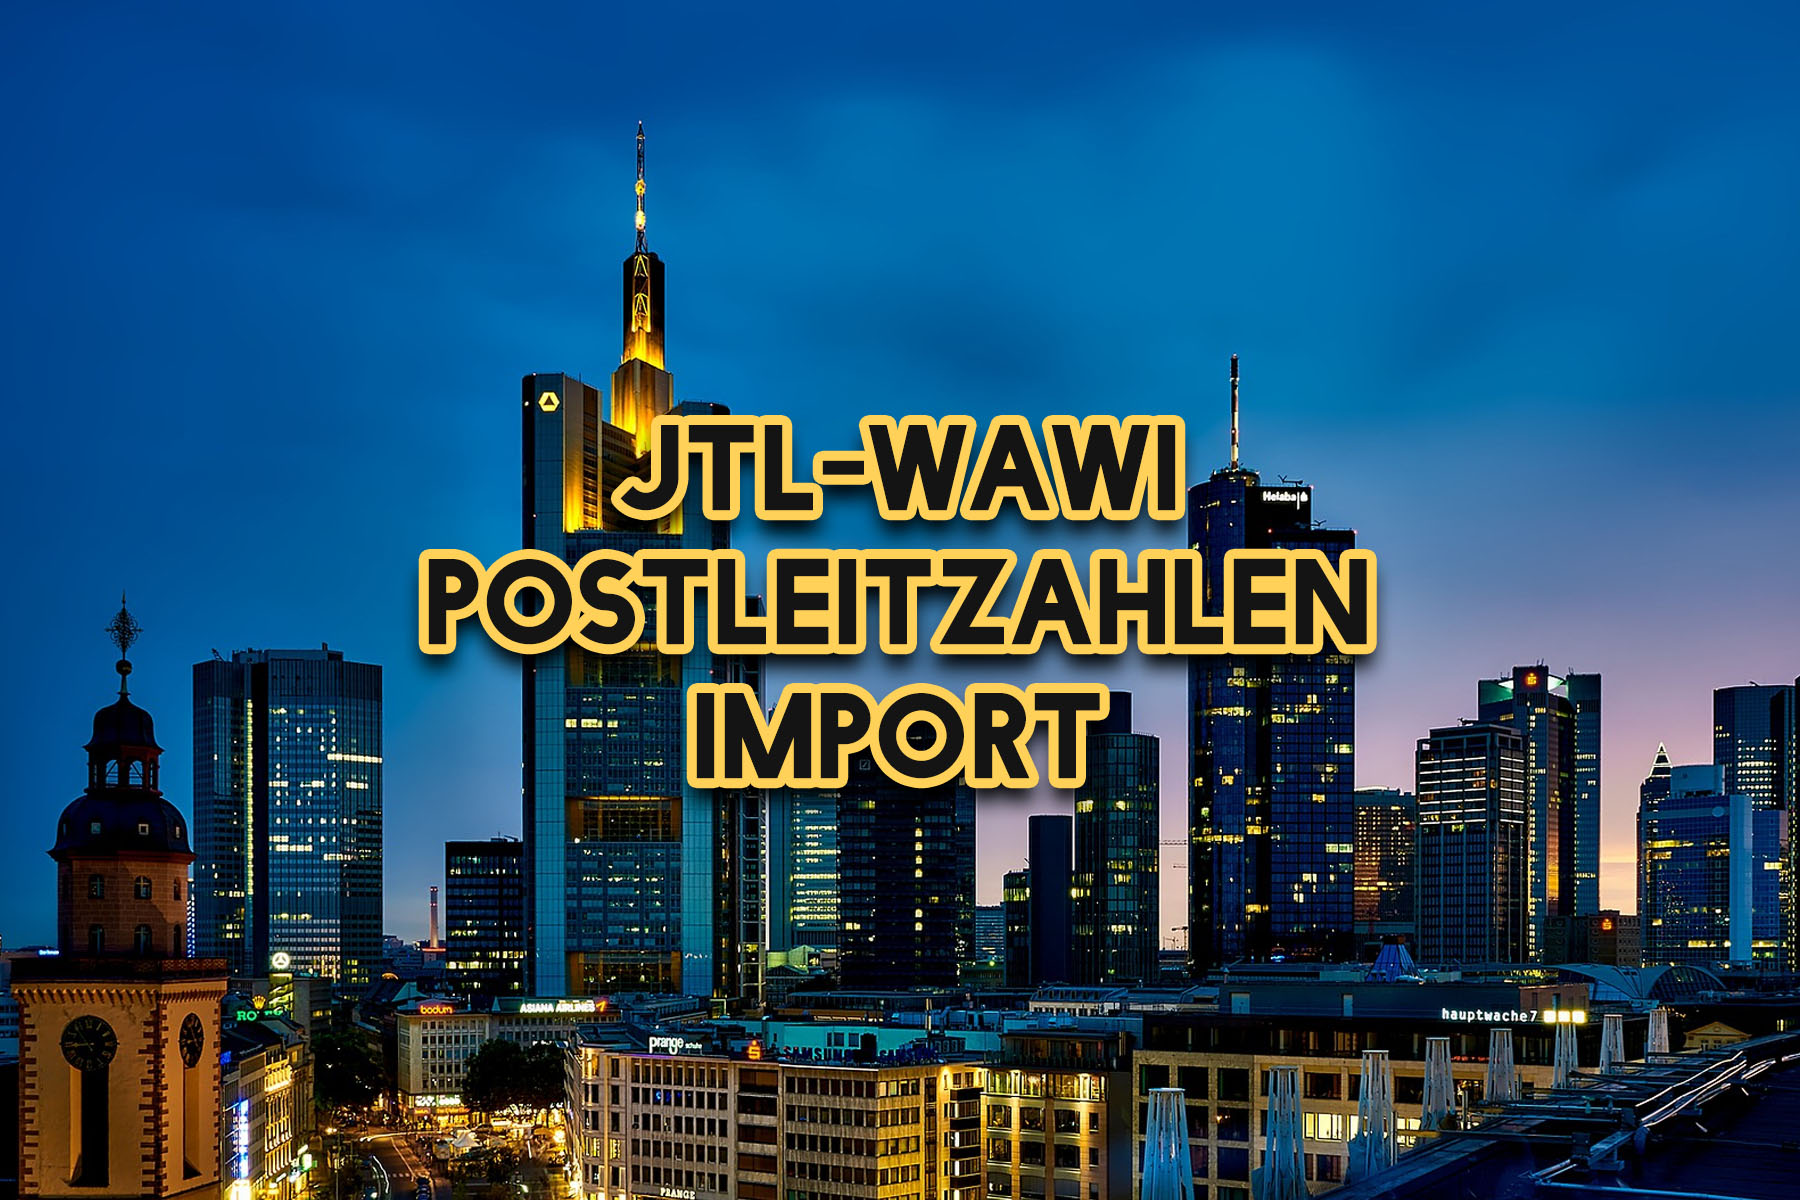 JTL-Wawi Postleitzahlen Import